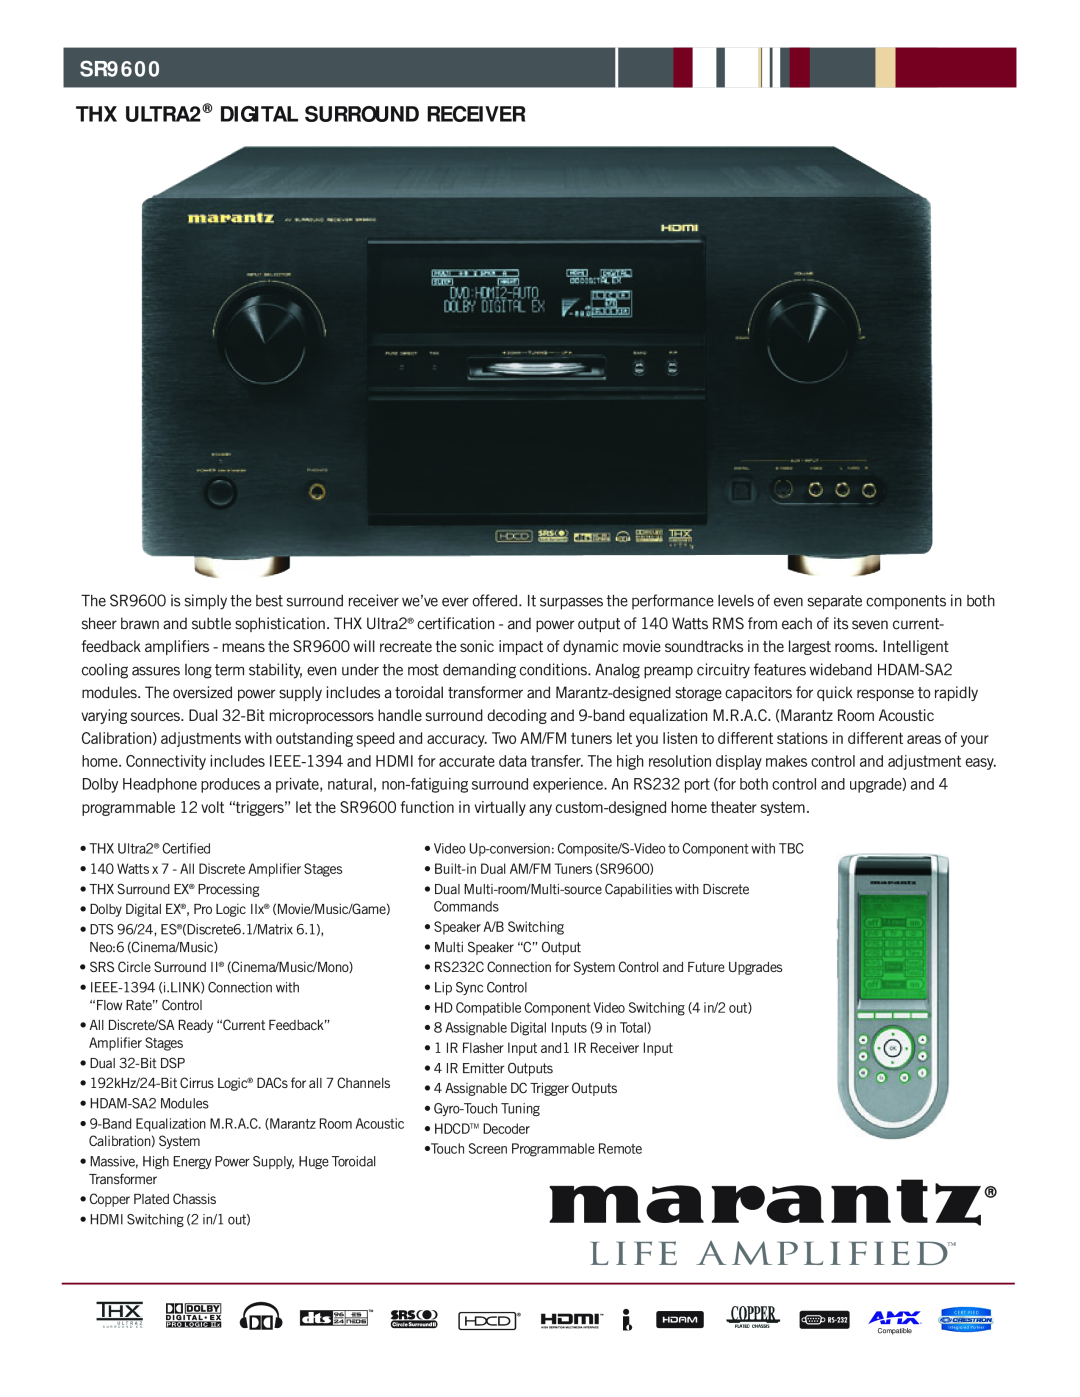 Marantz SR9600 manual THX ULTRA2 DIGITAL SURROUND RECEIVER 